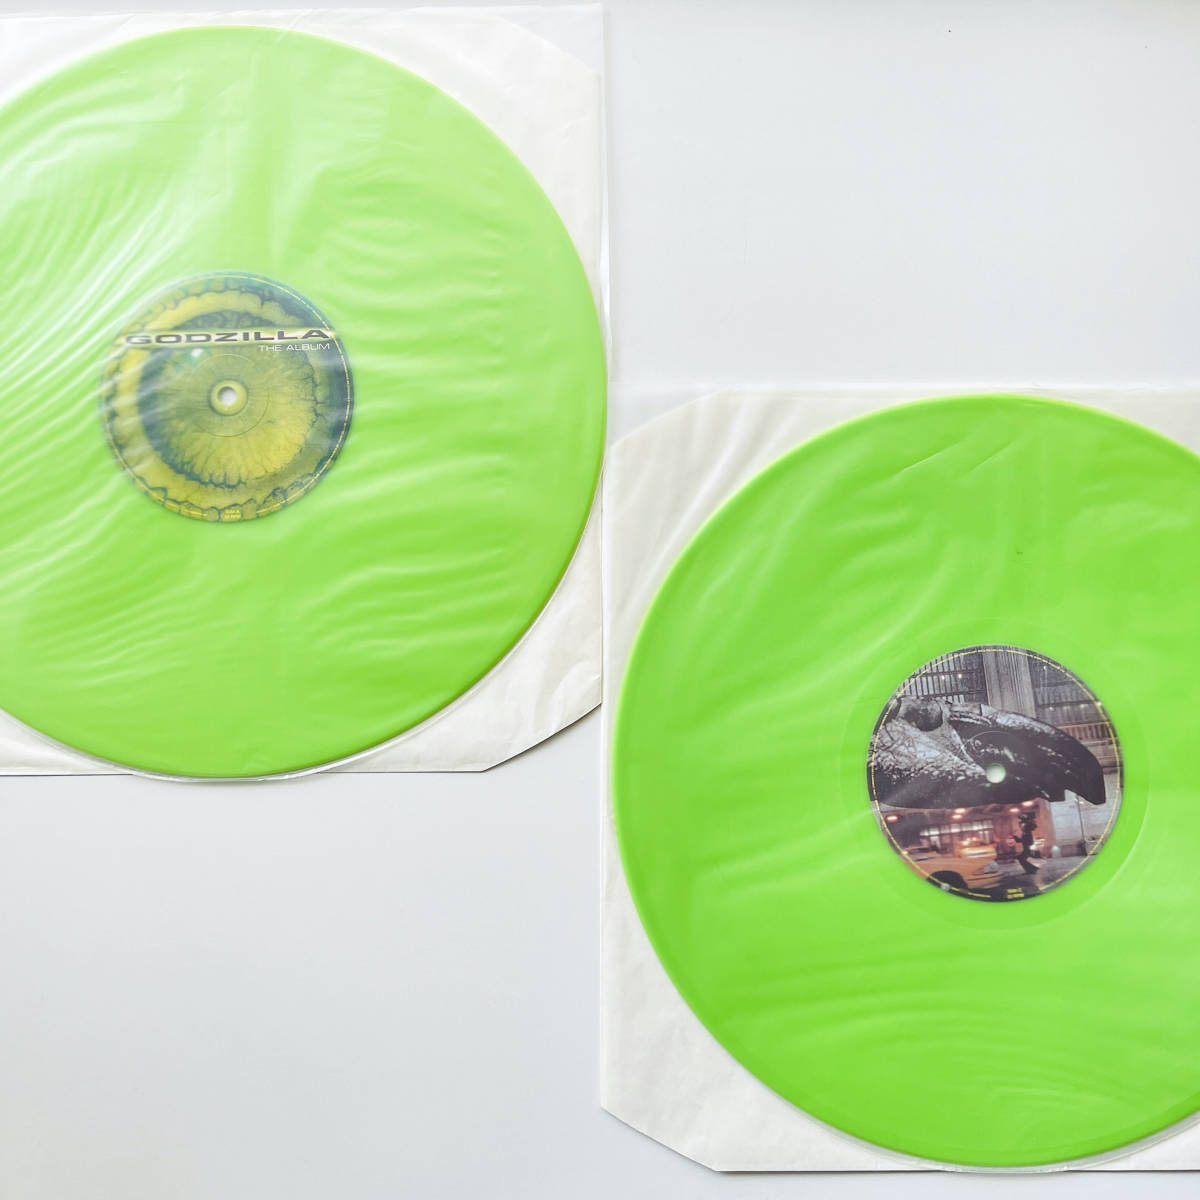  valuable EU original record 2LP color record ( Godzilla Godzilla The Album )David Arnold Jamiroquai Ben Folds Five Rage Against The Machine